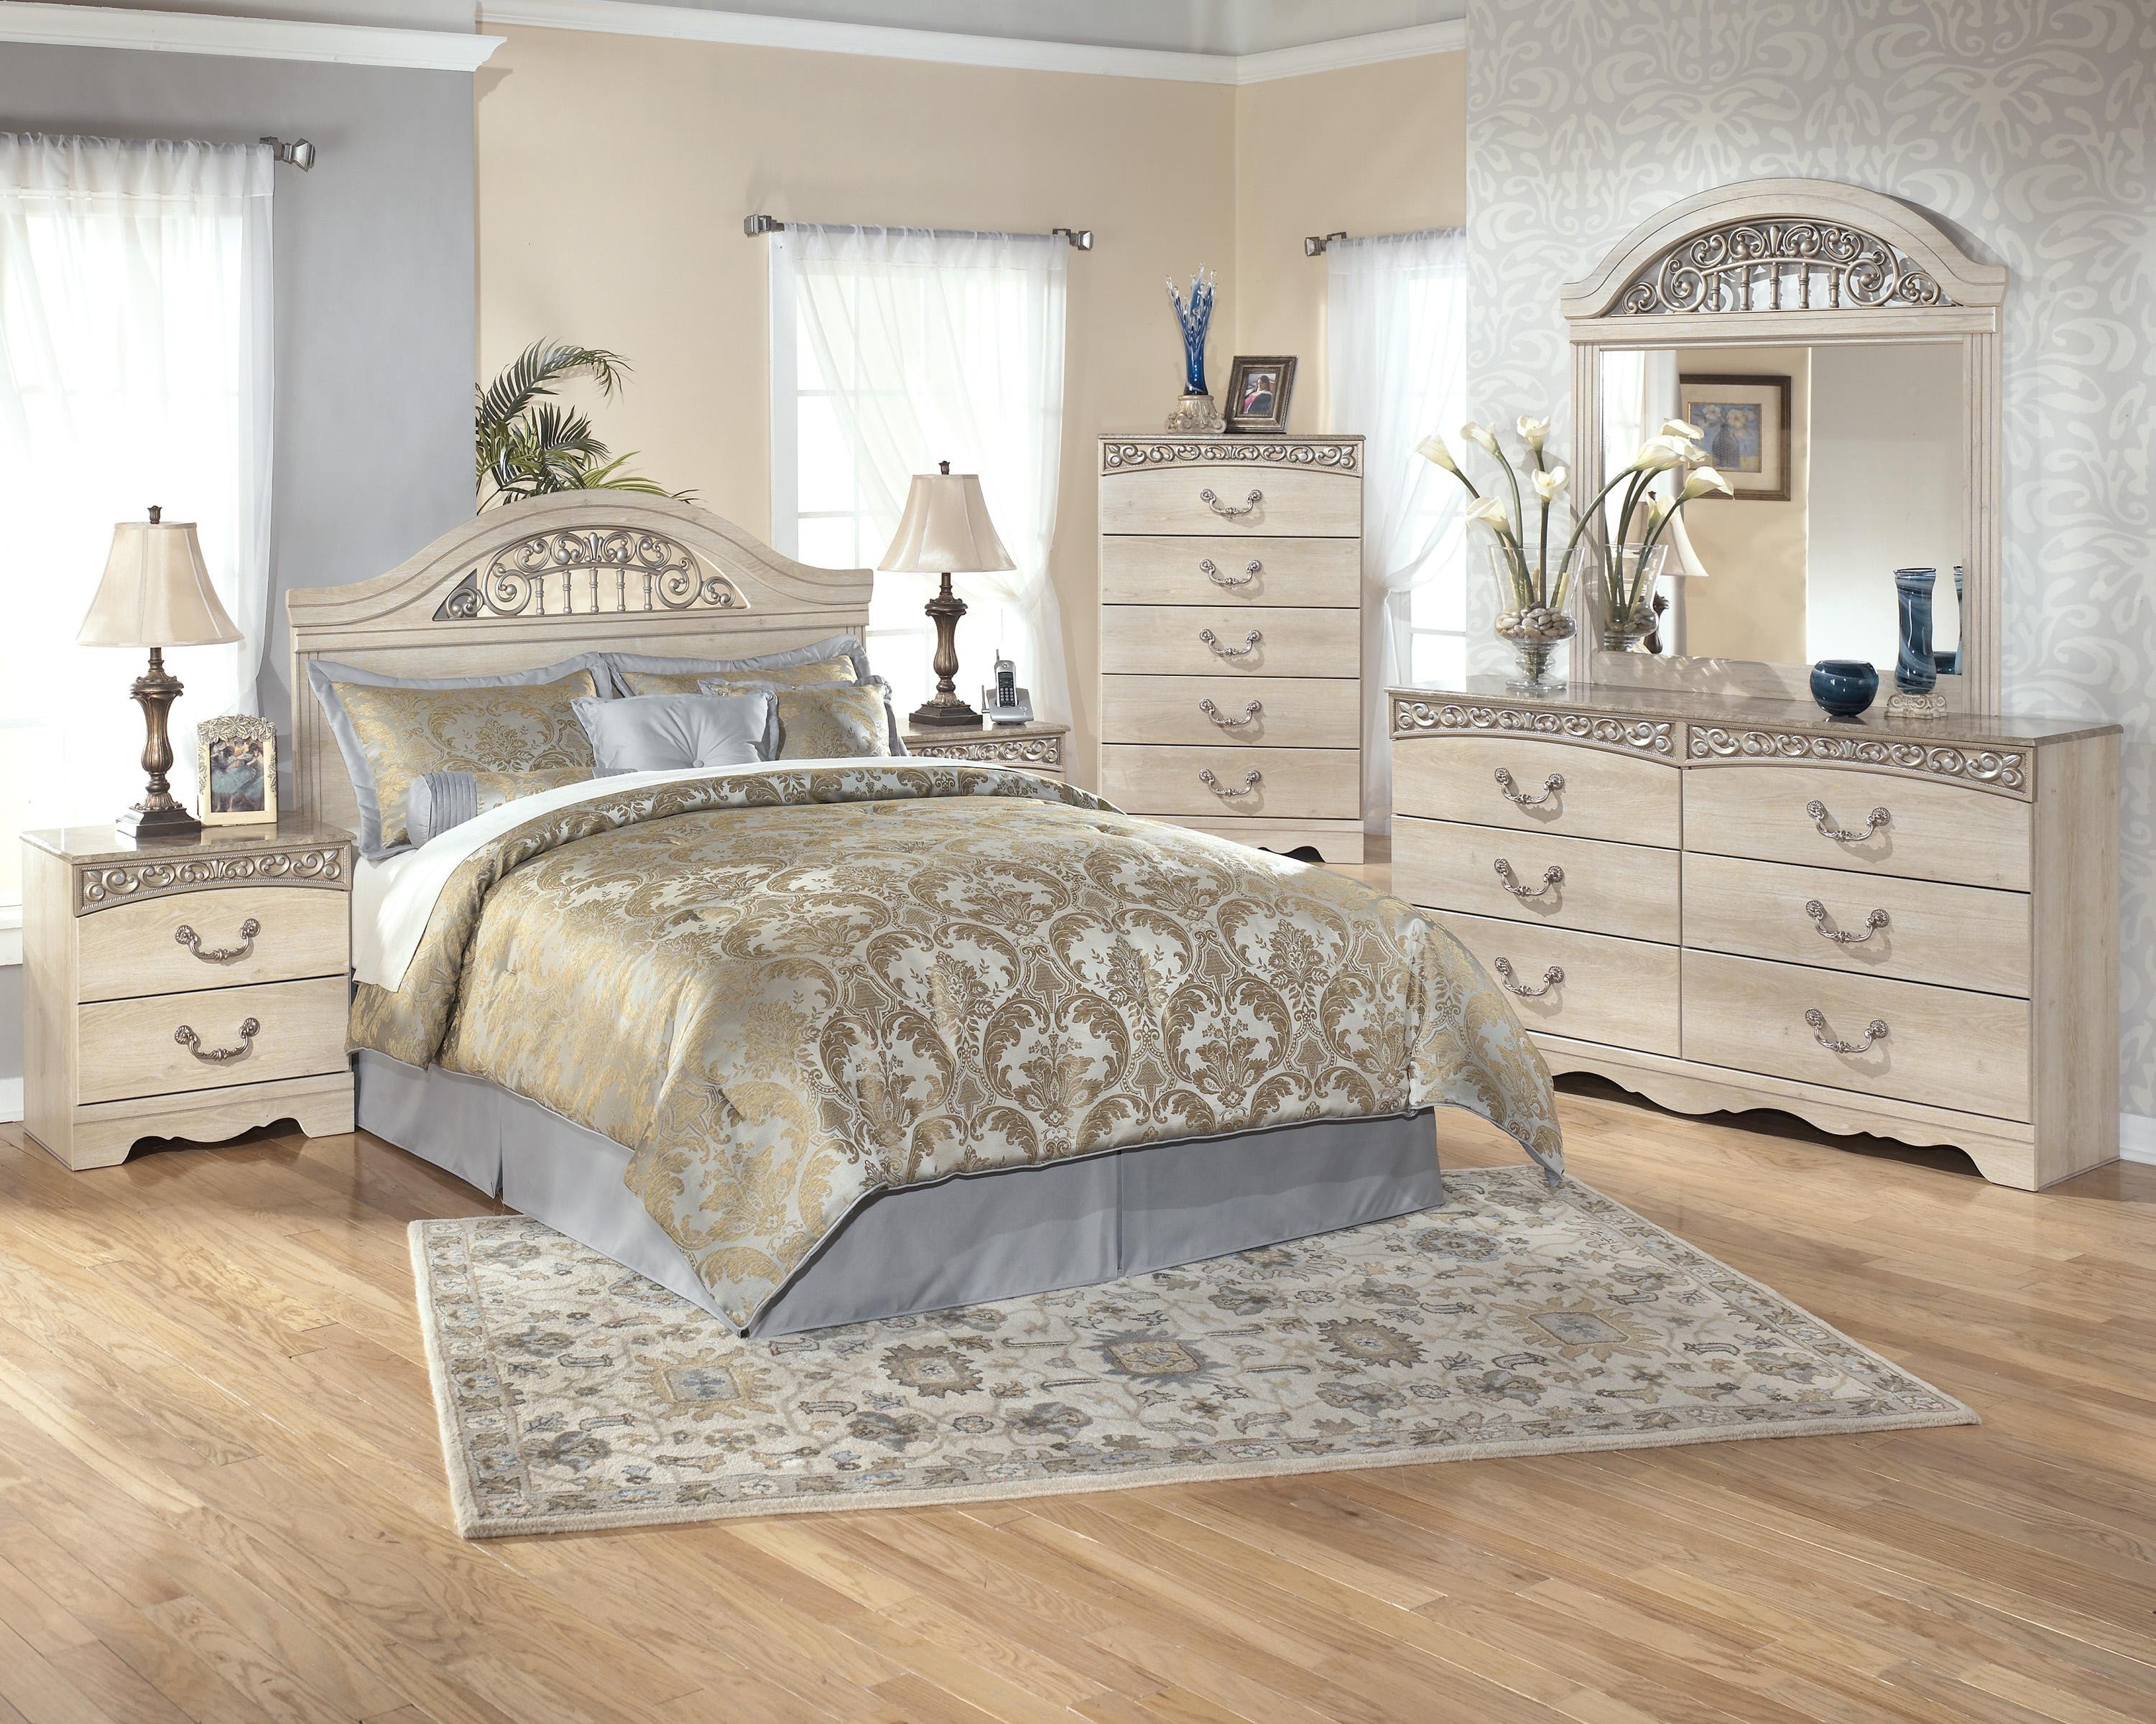 ashley catalina bedroom furniture